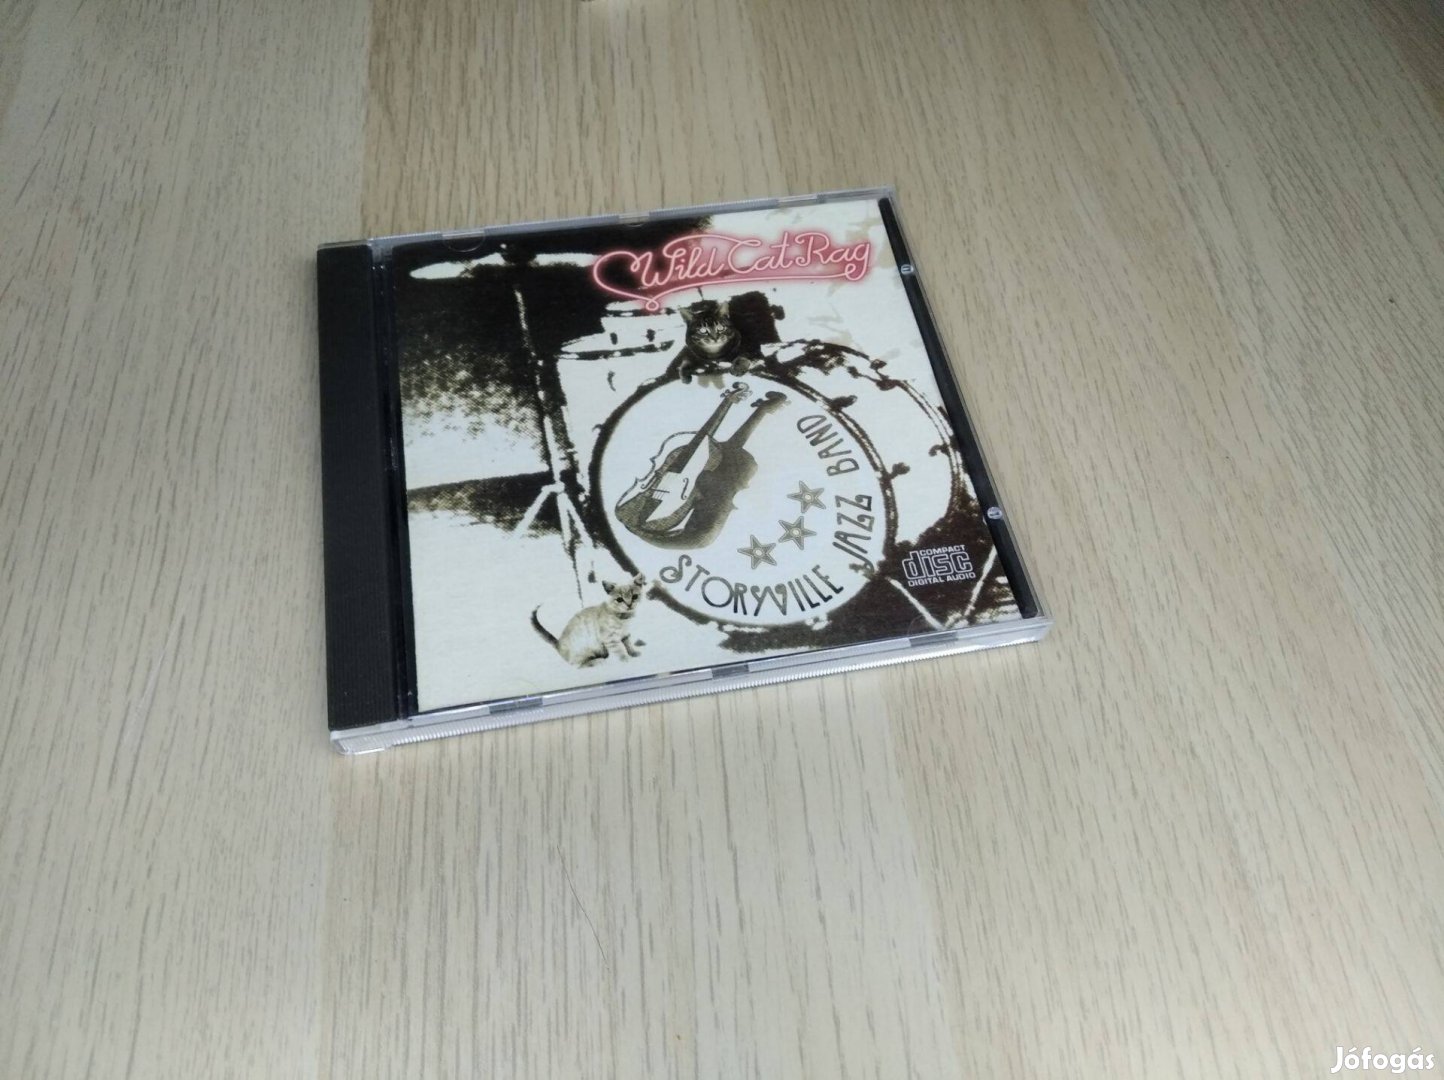 Storyville Jazz Band - Wild Cat Rag / CD (Hungary 1997.)